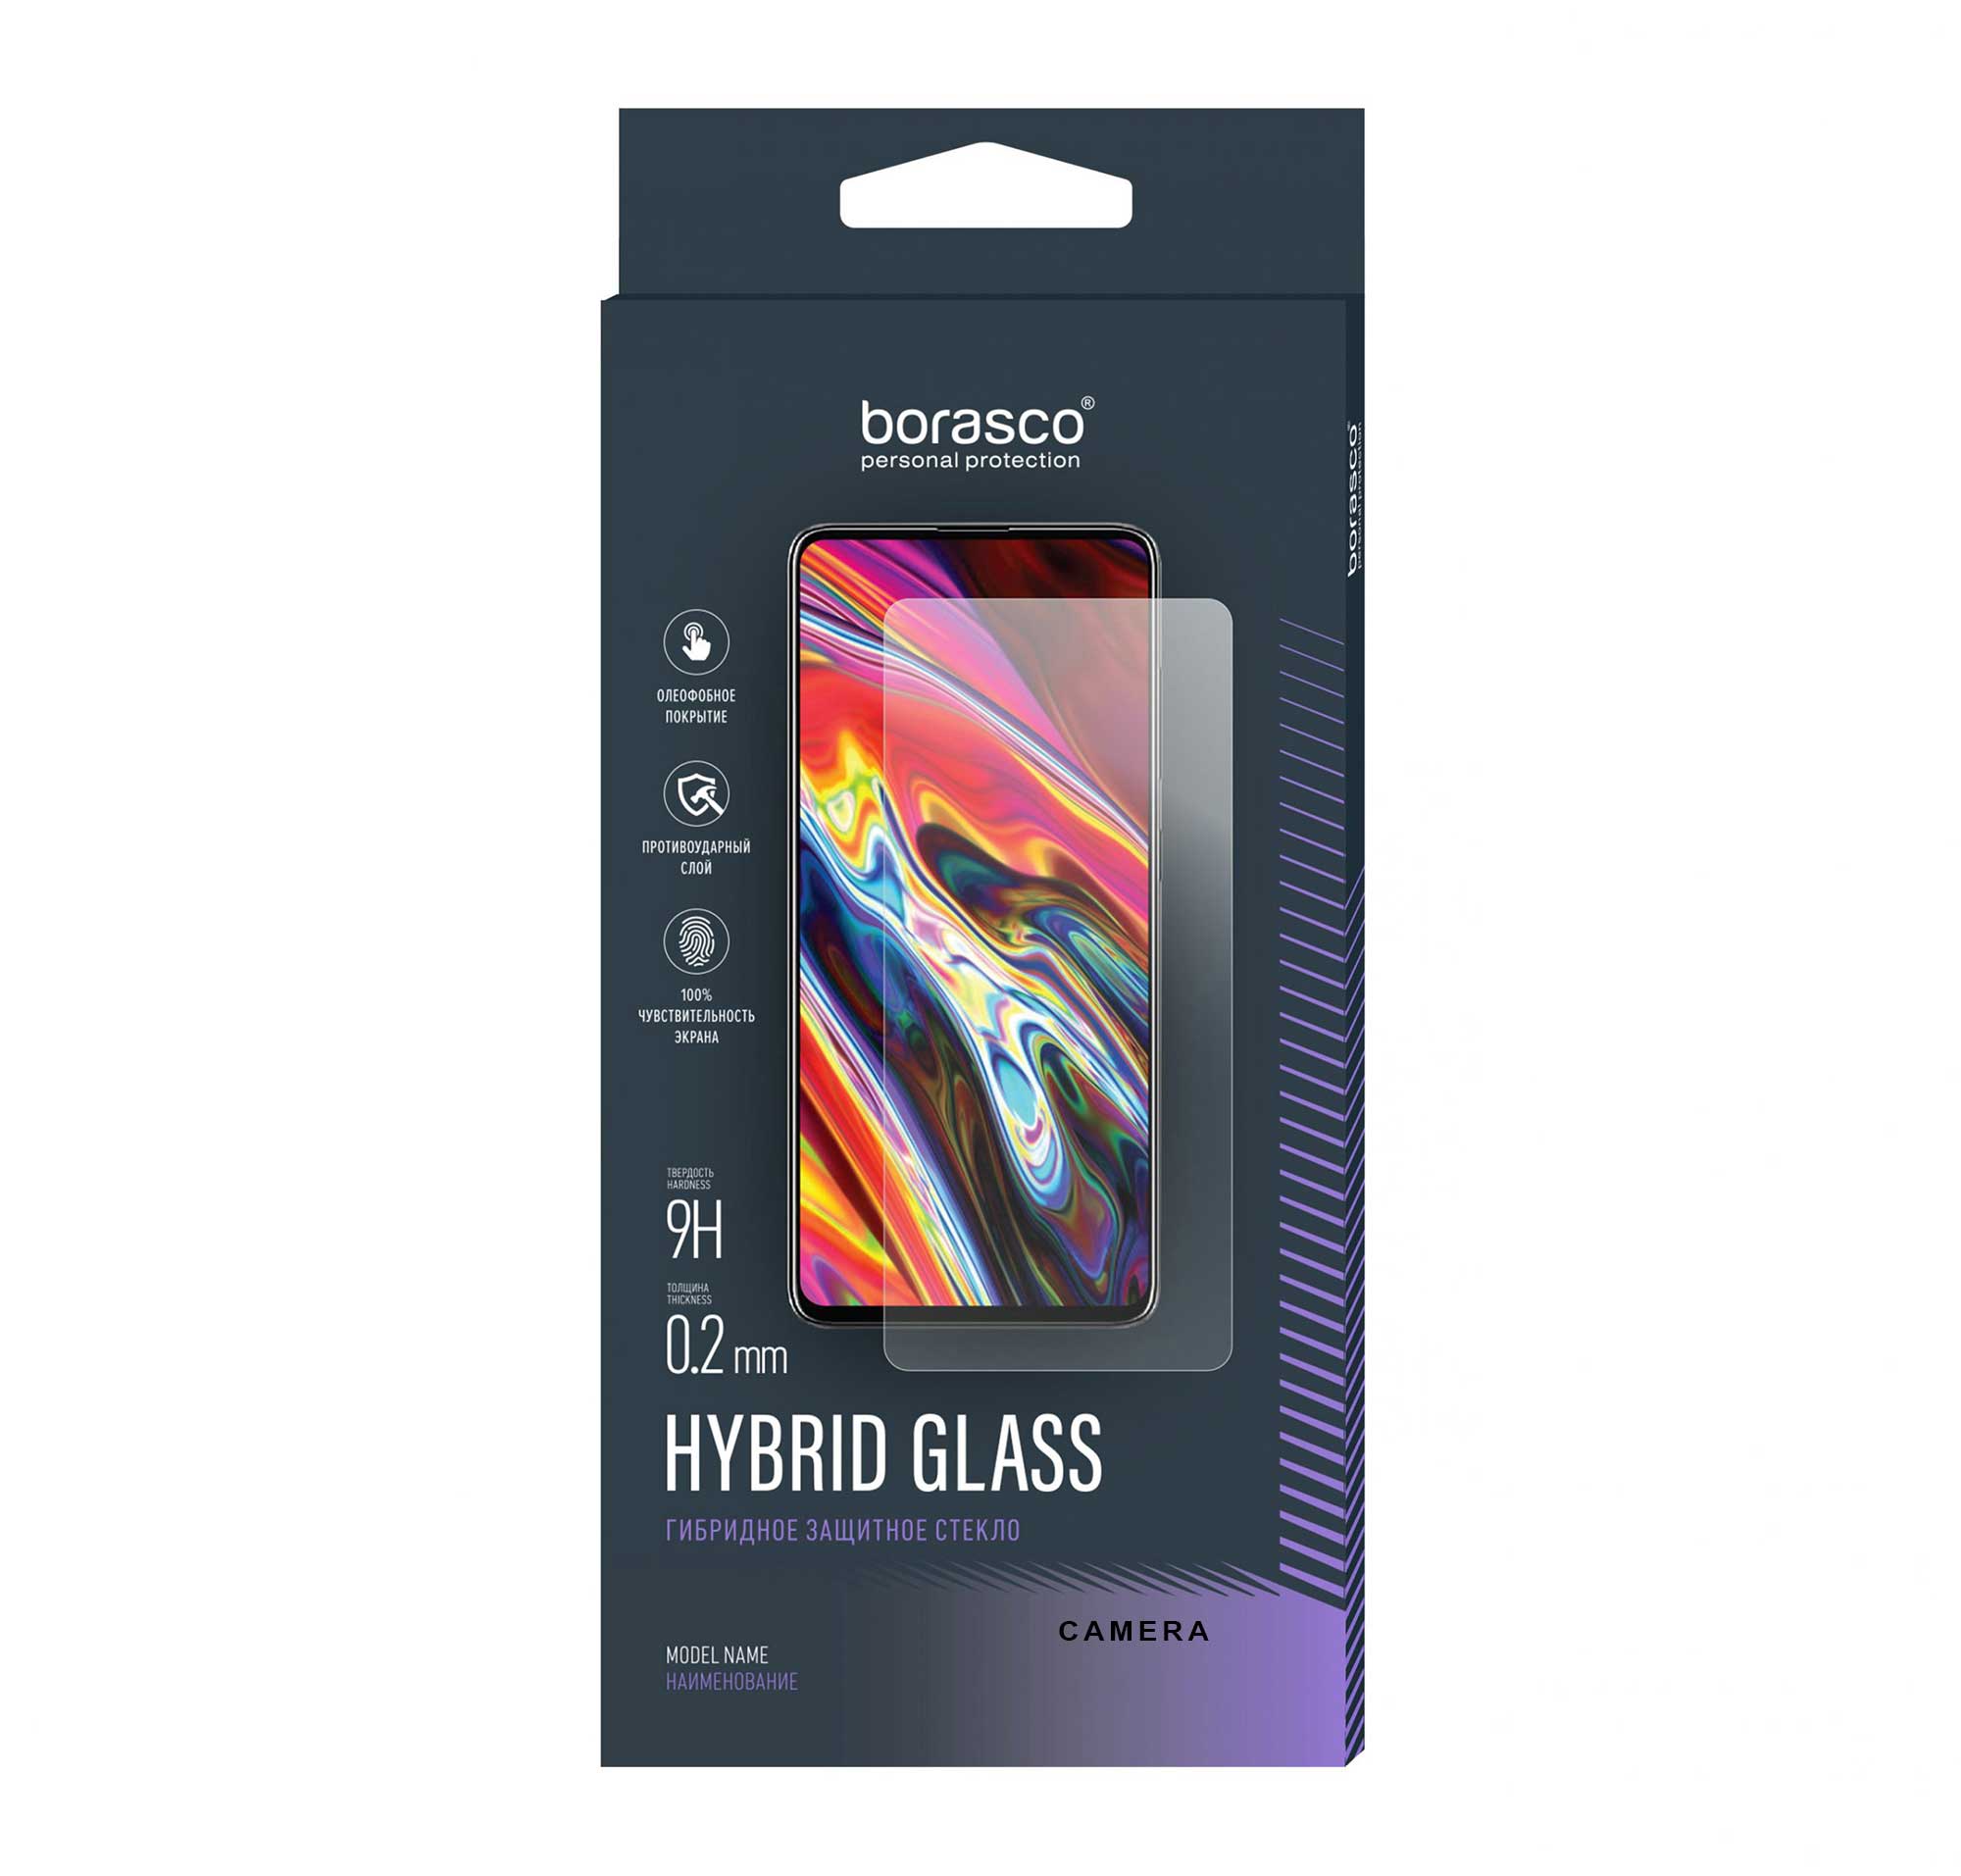 Защитное стекло (Экран+Камера) BoraSCO Hybrid Glass для ITEL Vision 1 Pro защитное стекло luxcase для itel vision 1 0 2mm transparent 82675